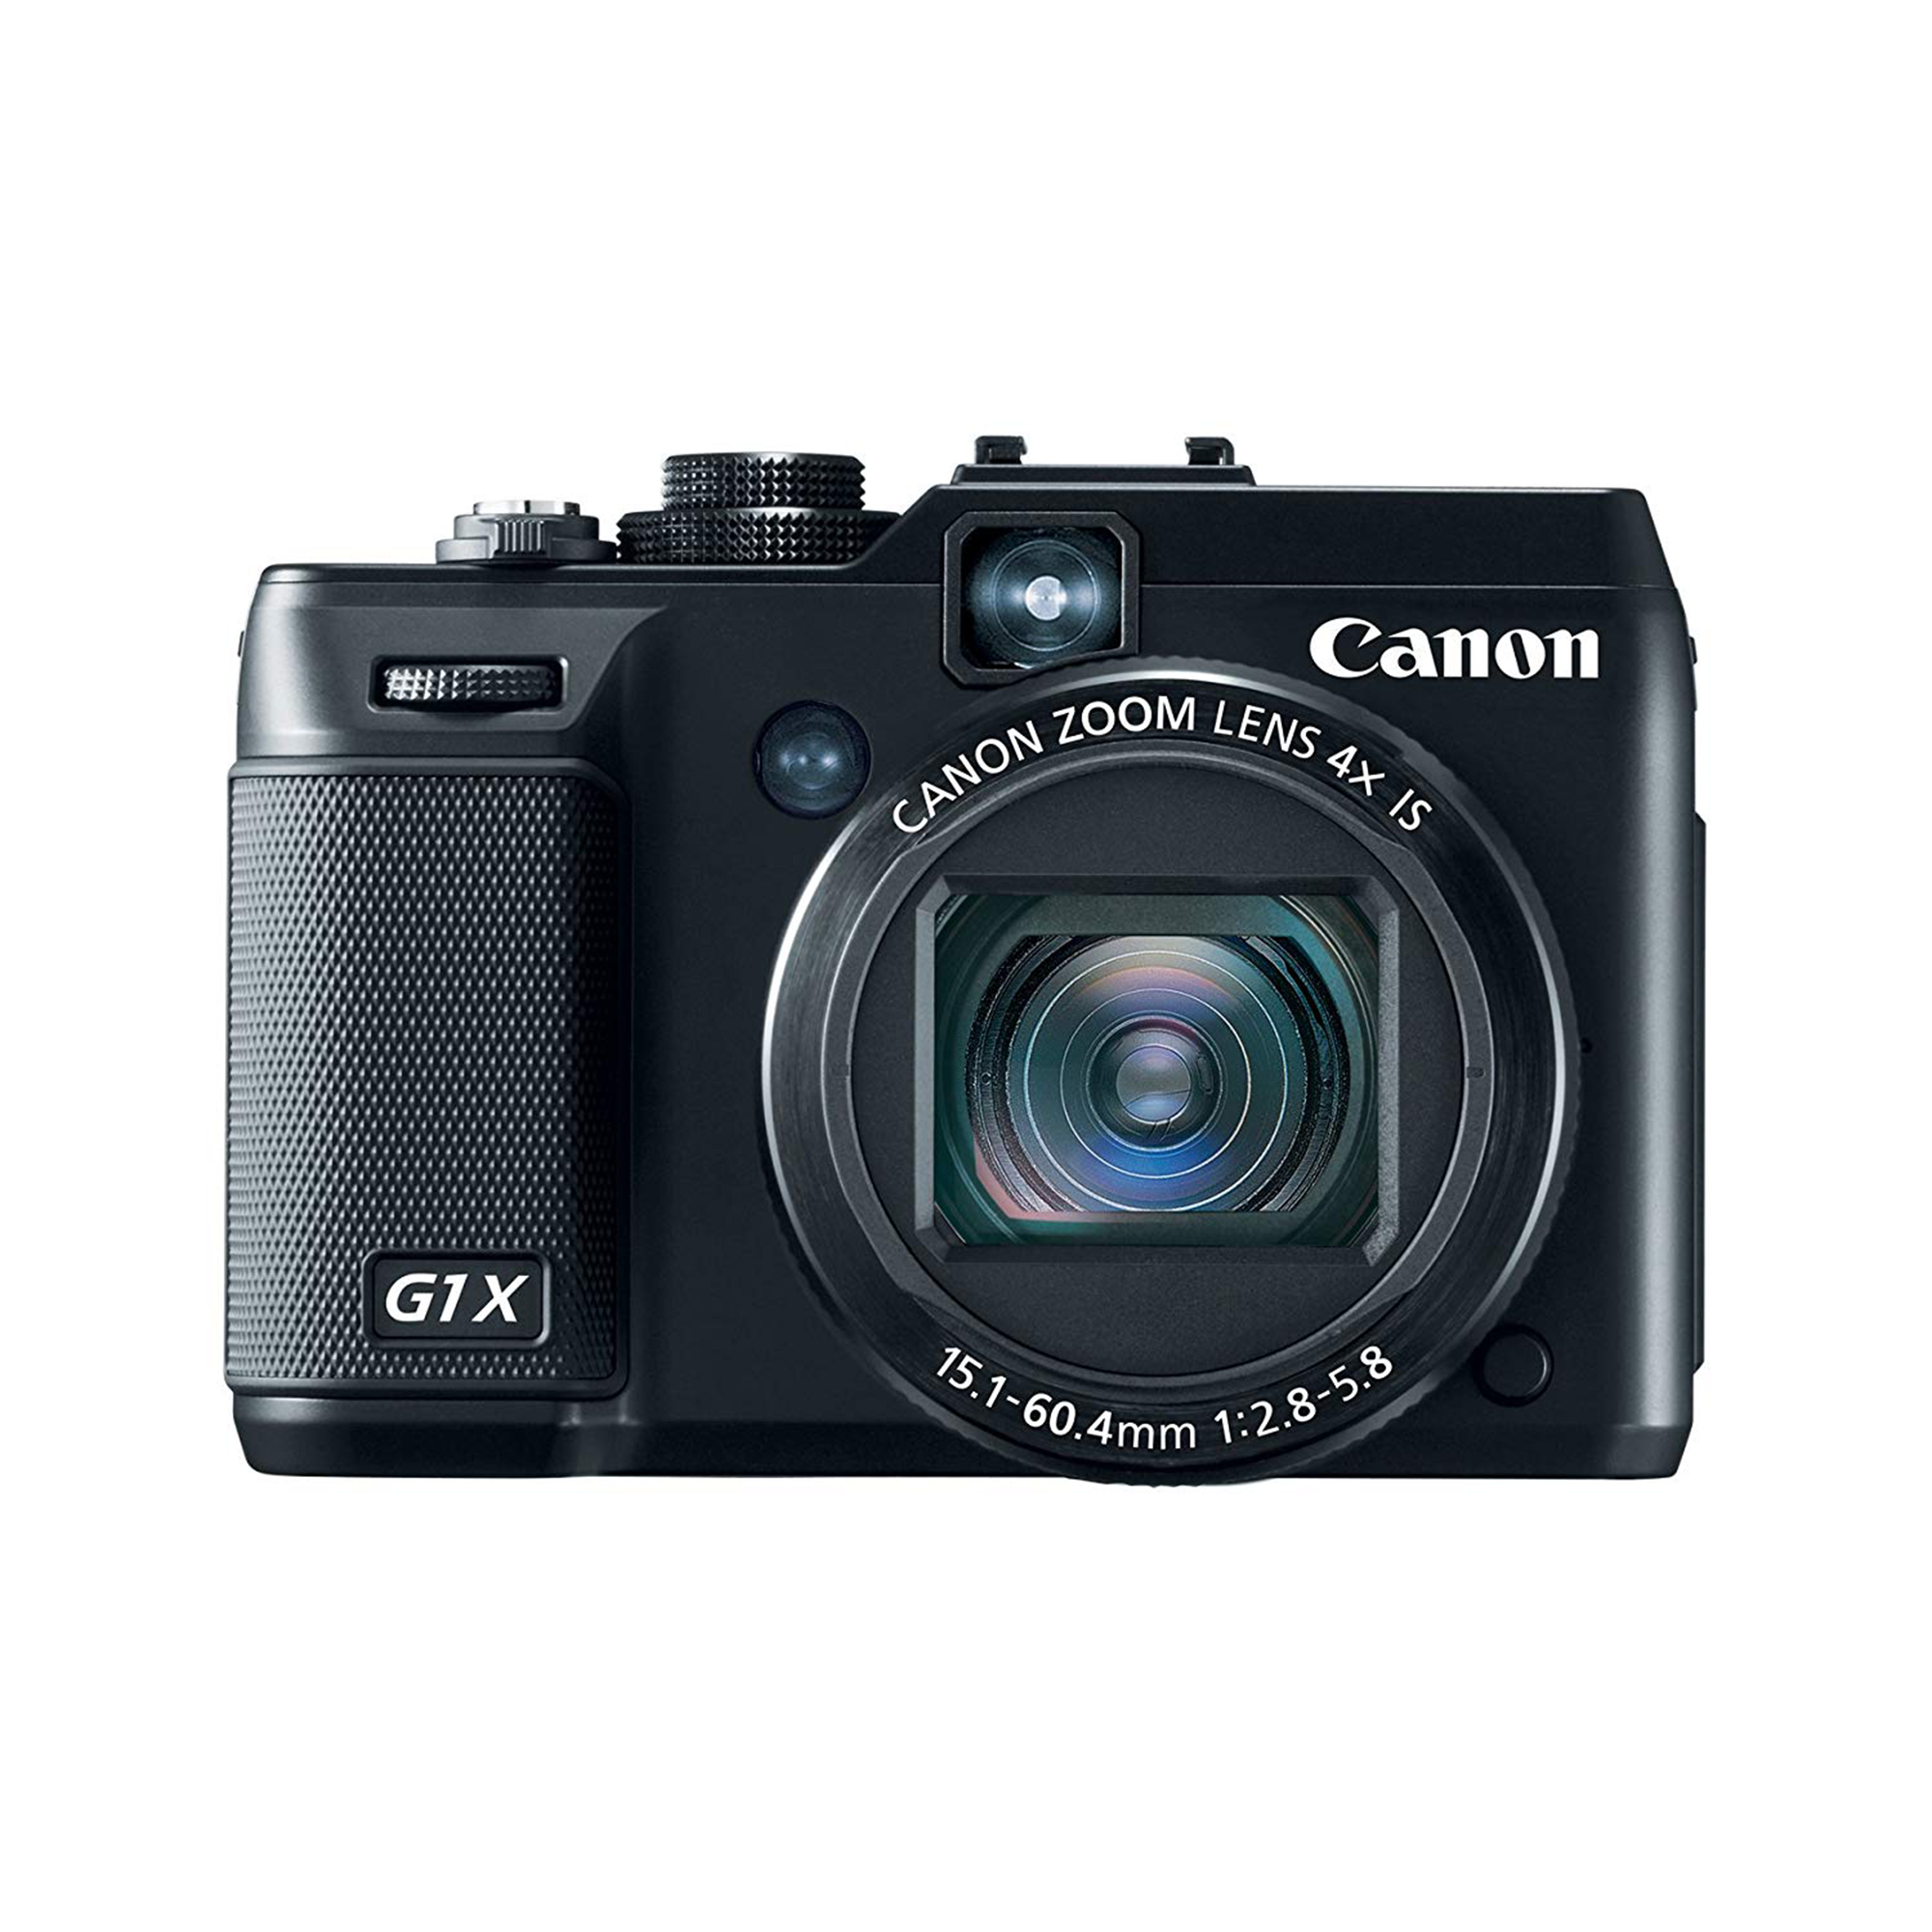 Canon Powershot G1X Digital Camera